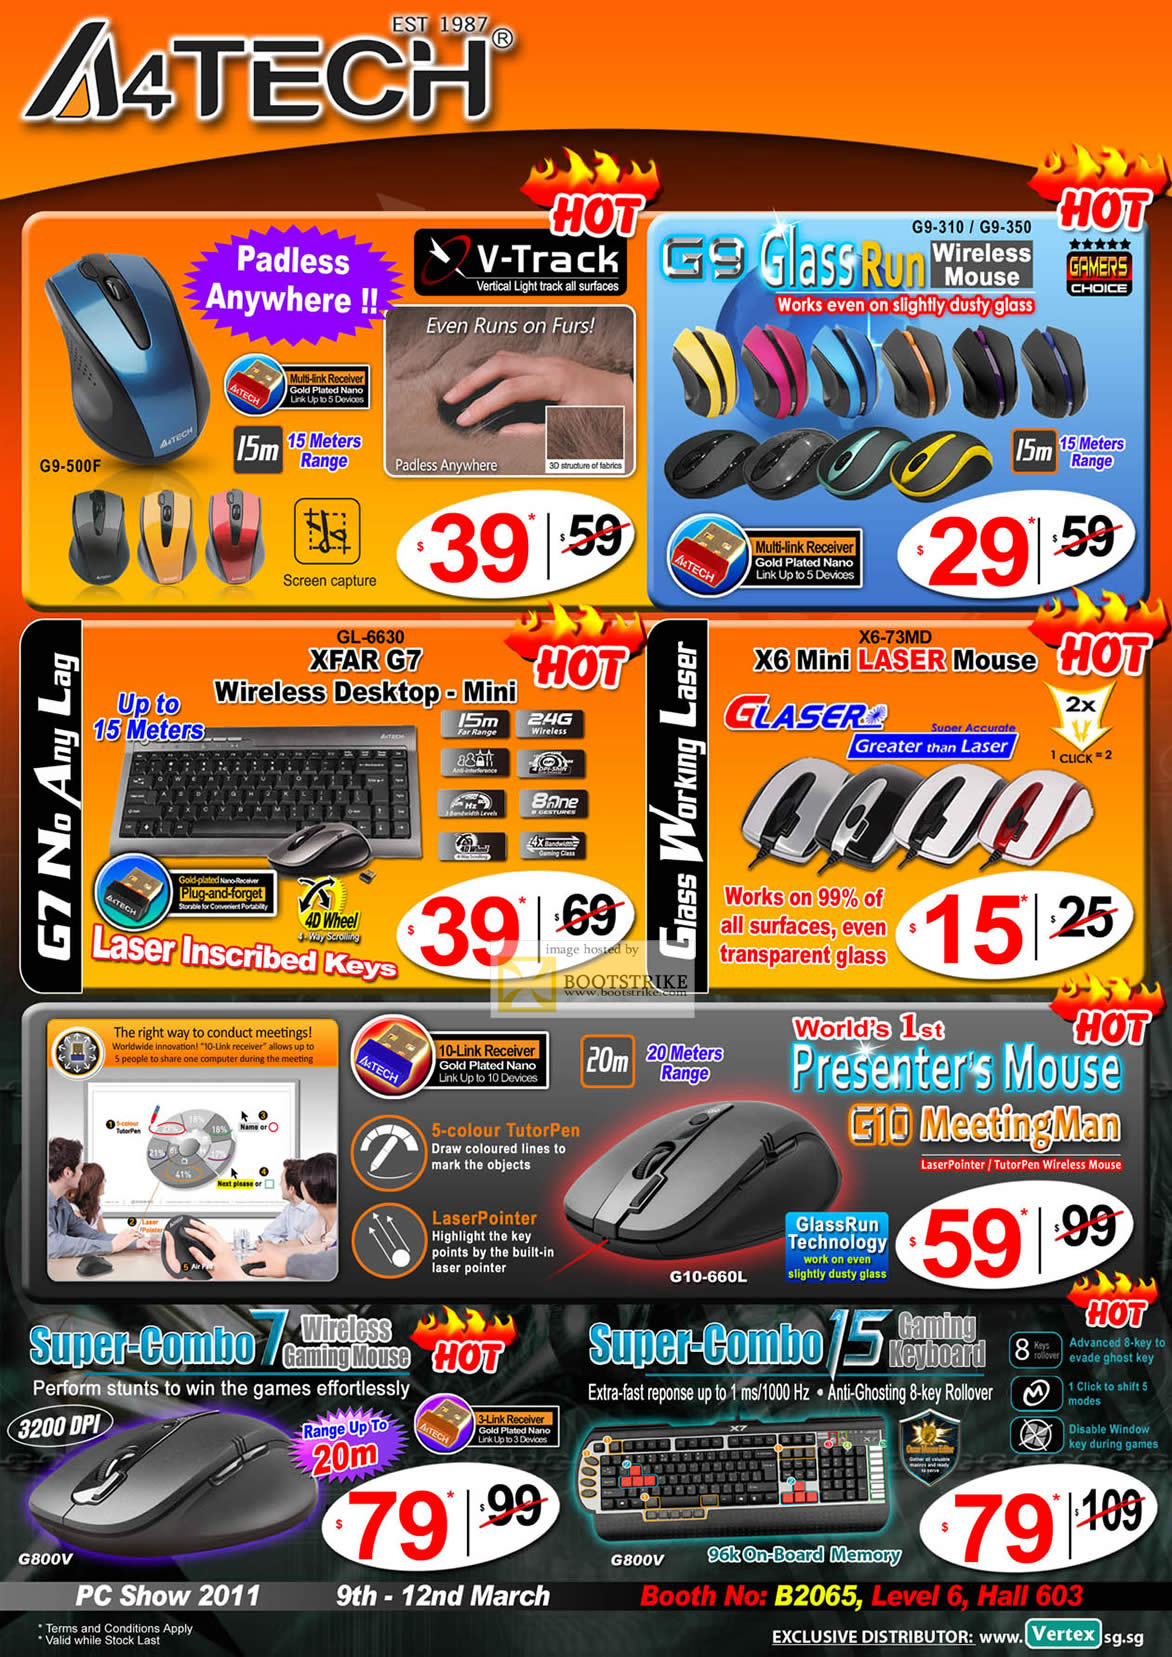 PC Show 2011 price list image brochure of Vertex A4Tech Mouse Keyboard Wireless G9-500F 310 950 Nano GL-6630 660L X6-73MD Laser G10 MeetingMan G800V